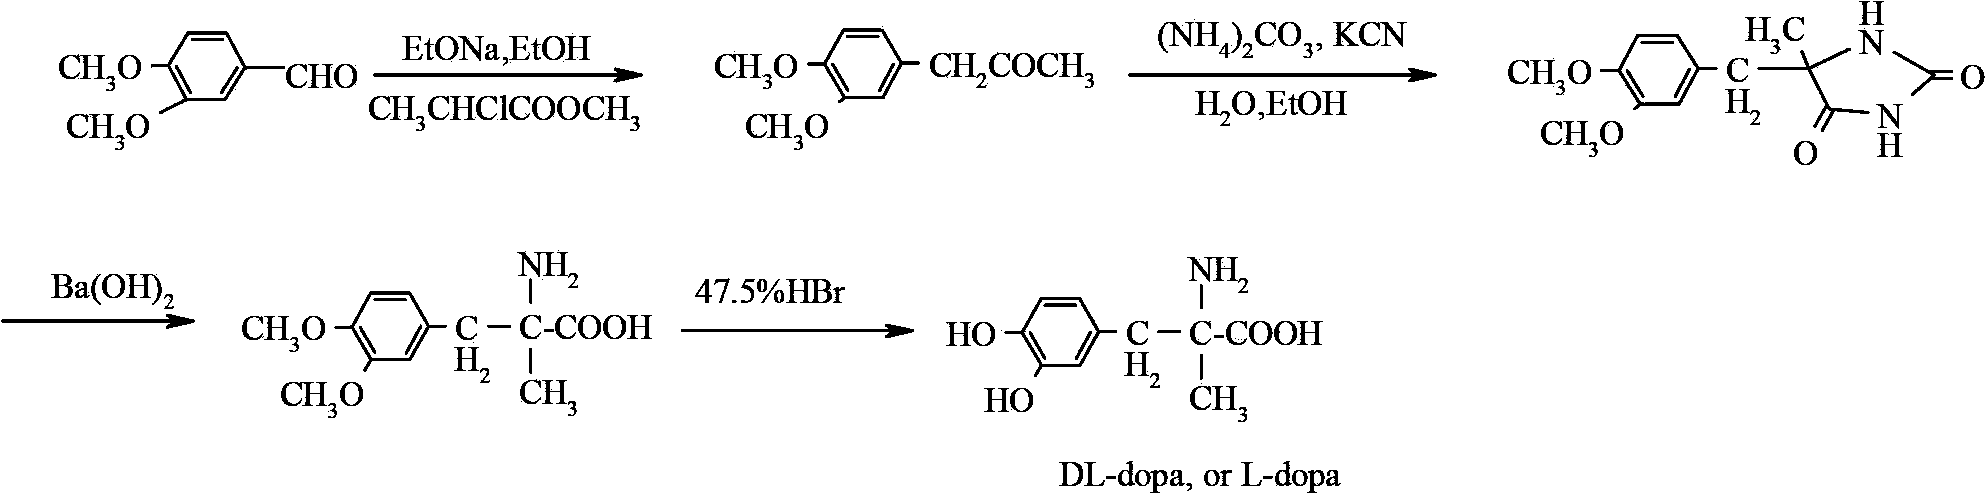 Method for preparing methyldopa through microwave basic hydrolysis 5-methyl-5-(3,4-dimethoxy benzyl) hydantoin